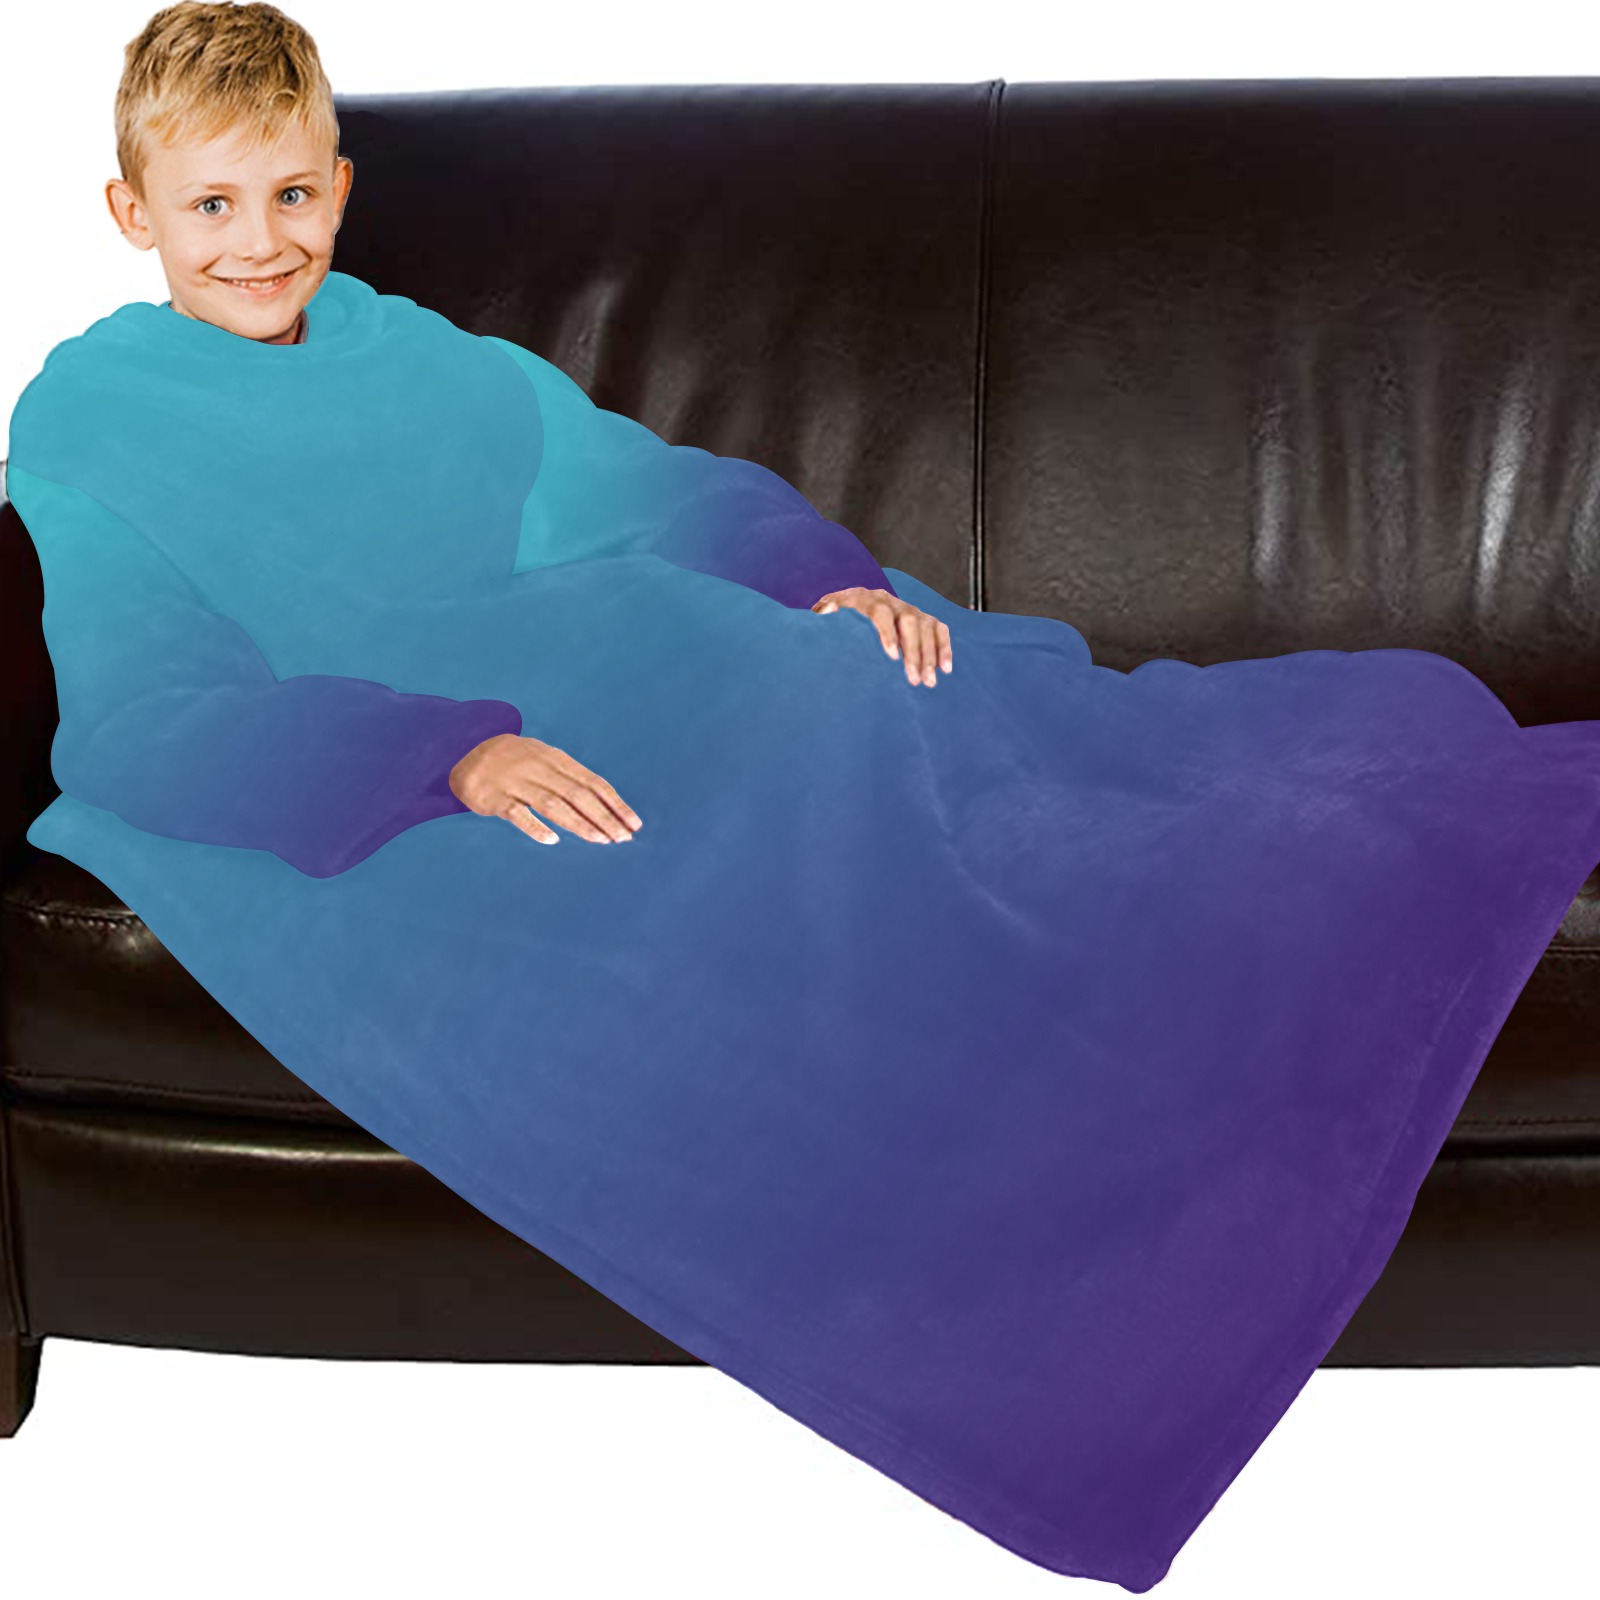 blu mau Blanket Robe with Sleeves for Kids